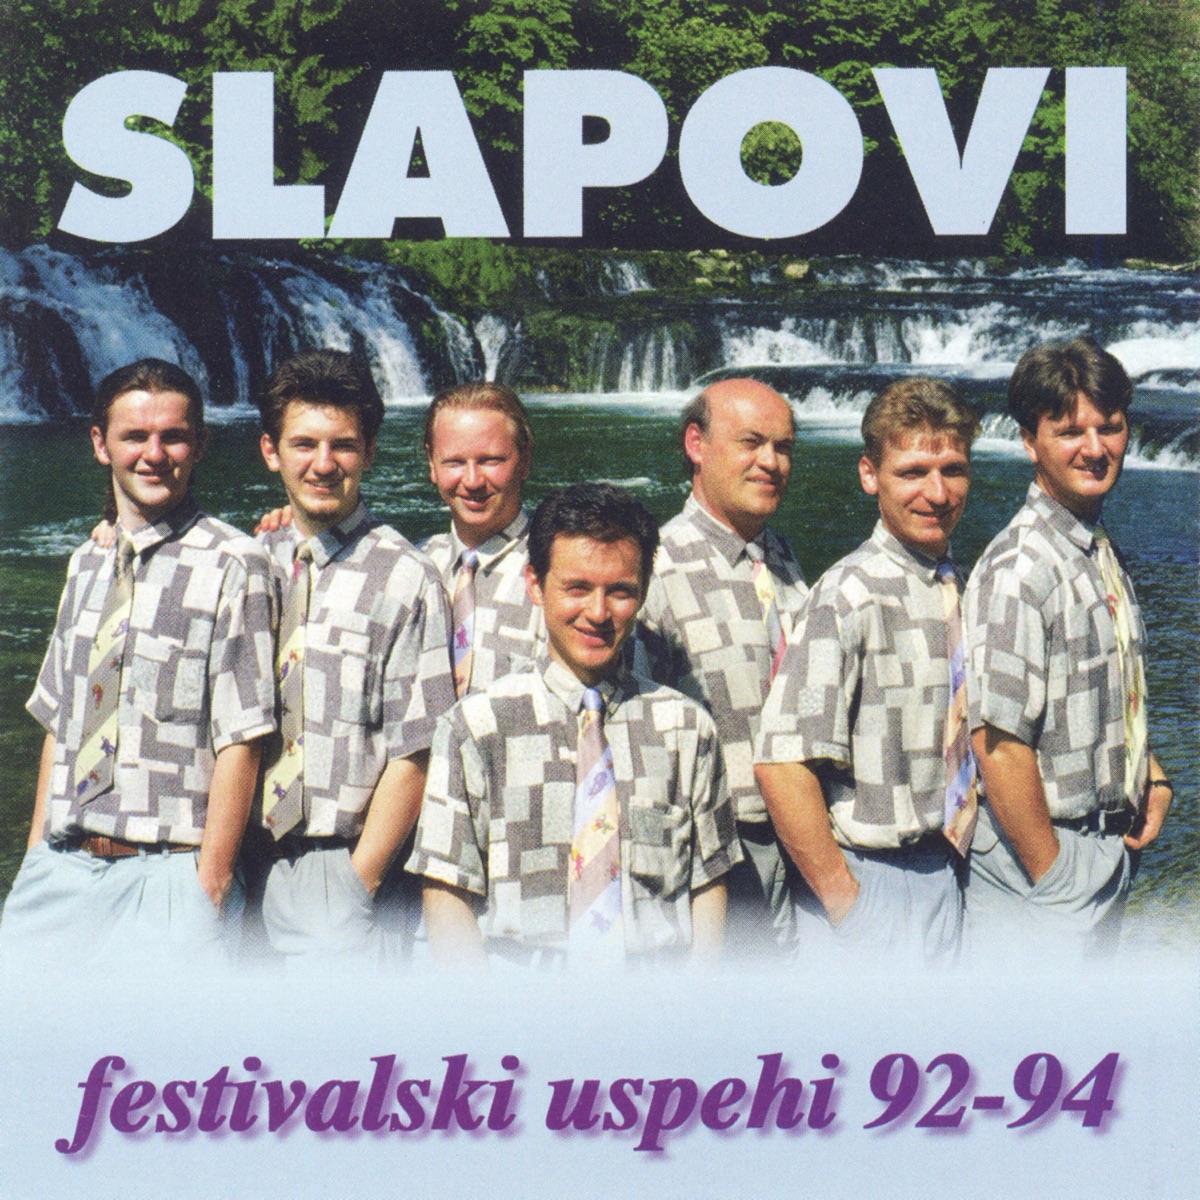 Festivalski uspehi 92-94 - Album by SLAPOVI - Apple Music